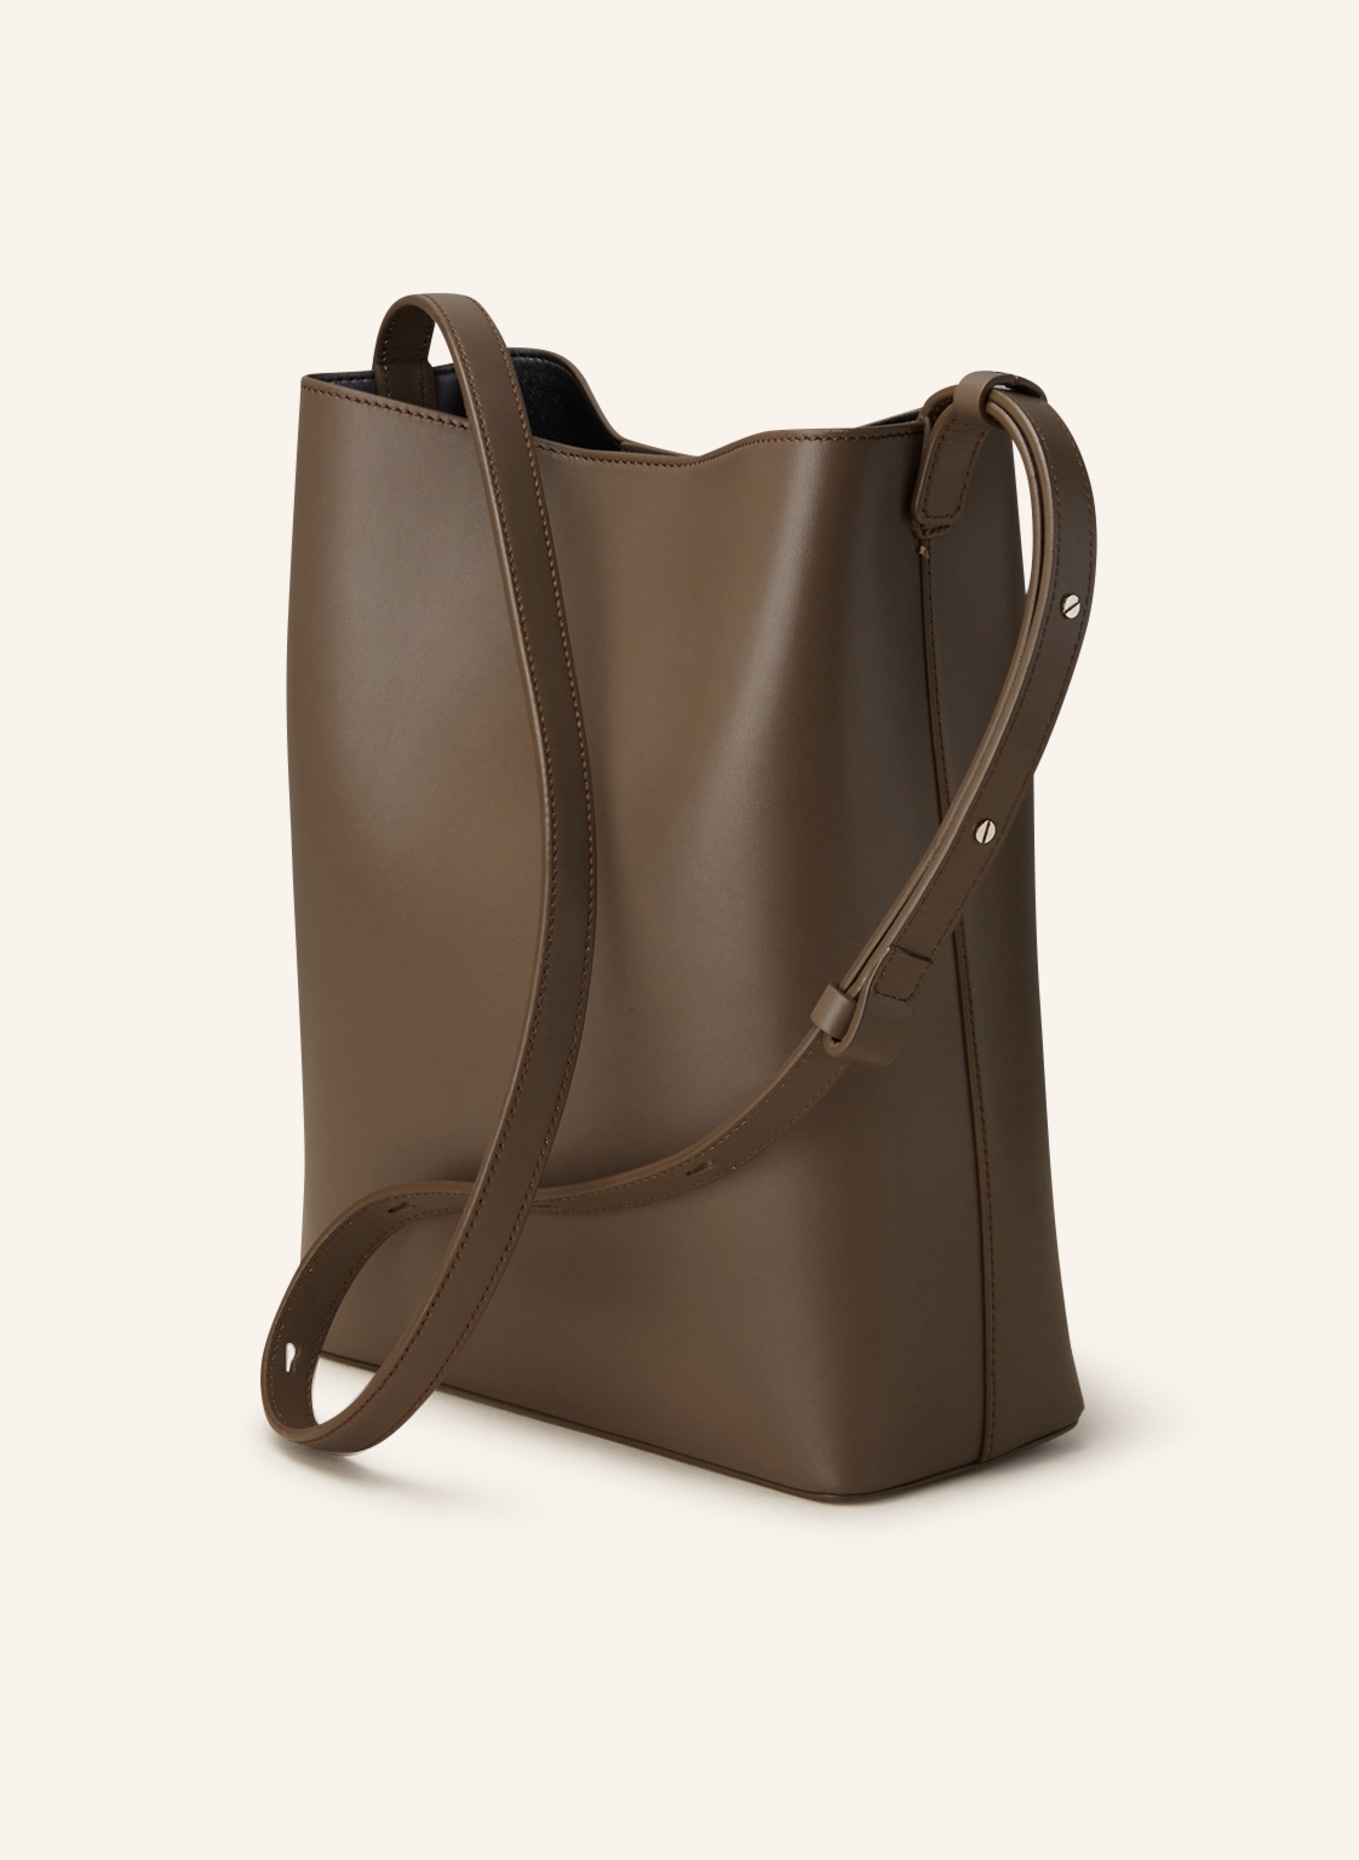 Sac bucket smooth leather shoulder bag - Aesther Ekme - Women